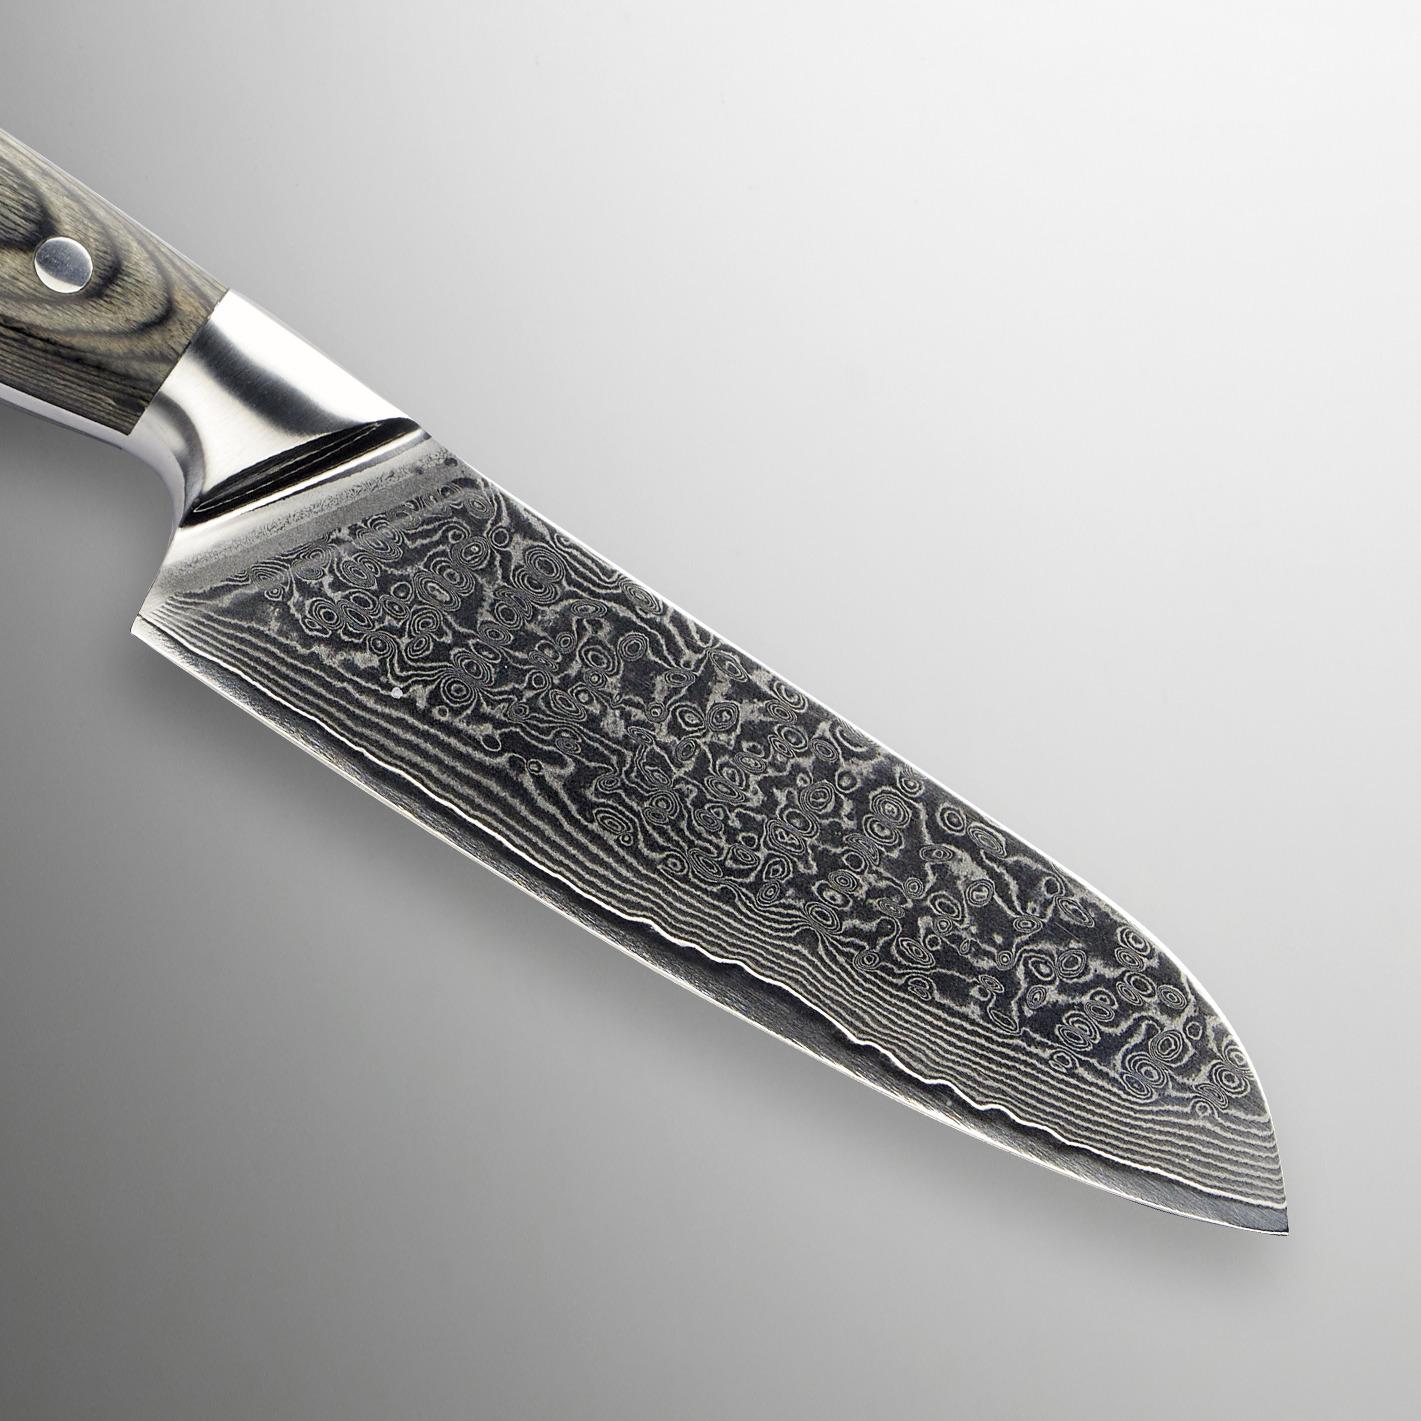 Messerset Damast, 3-teilig - Silberfarben/Grau, Holzwerkstoff/Metall (36,2/3,2/17,4cm) - Premium Living